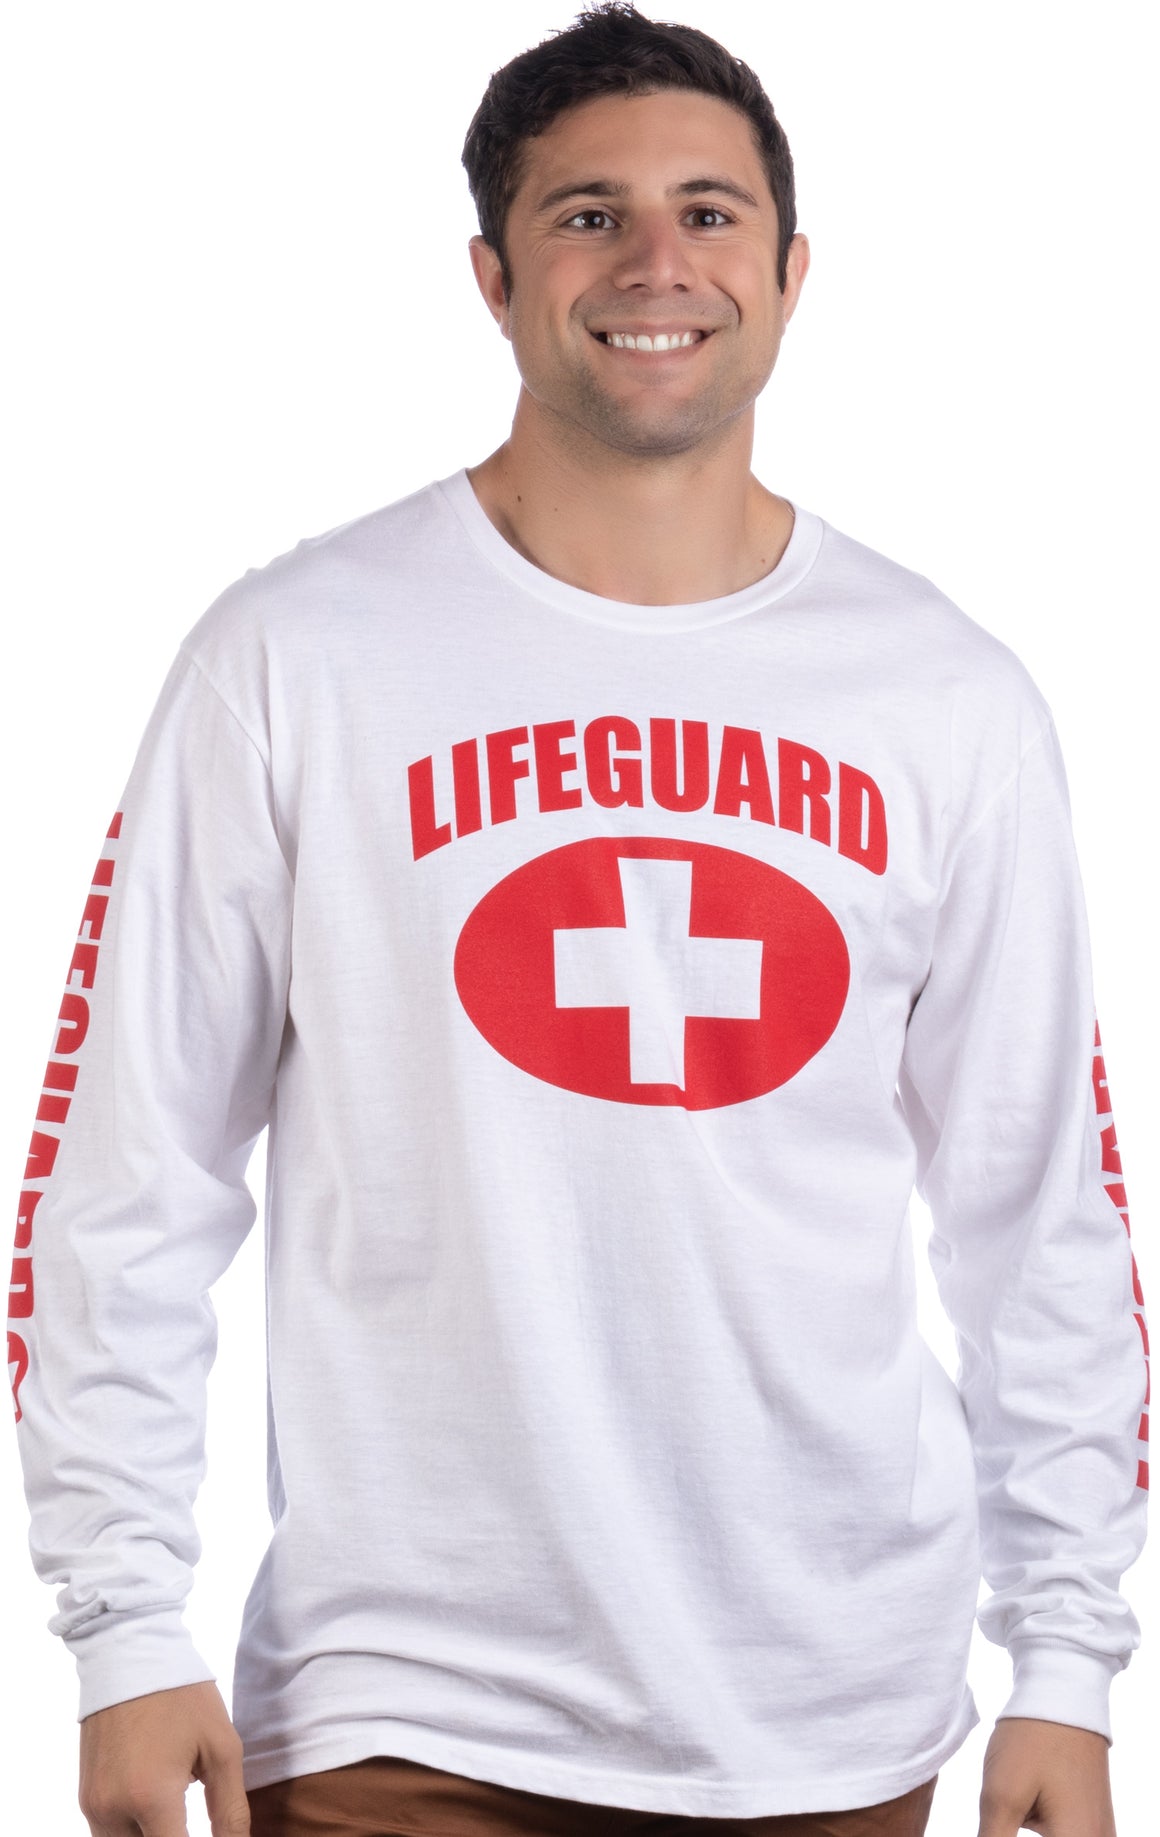 LIFEGUARD | White Lifeguarding Unisex Uniform Costume T-shirt for Men ...